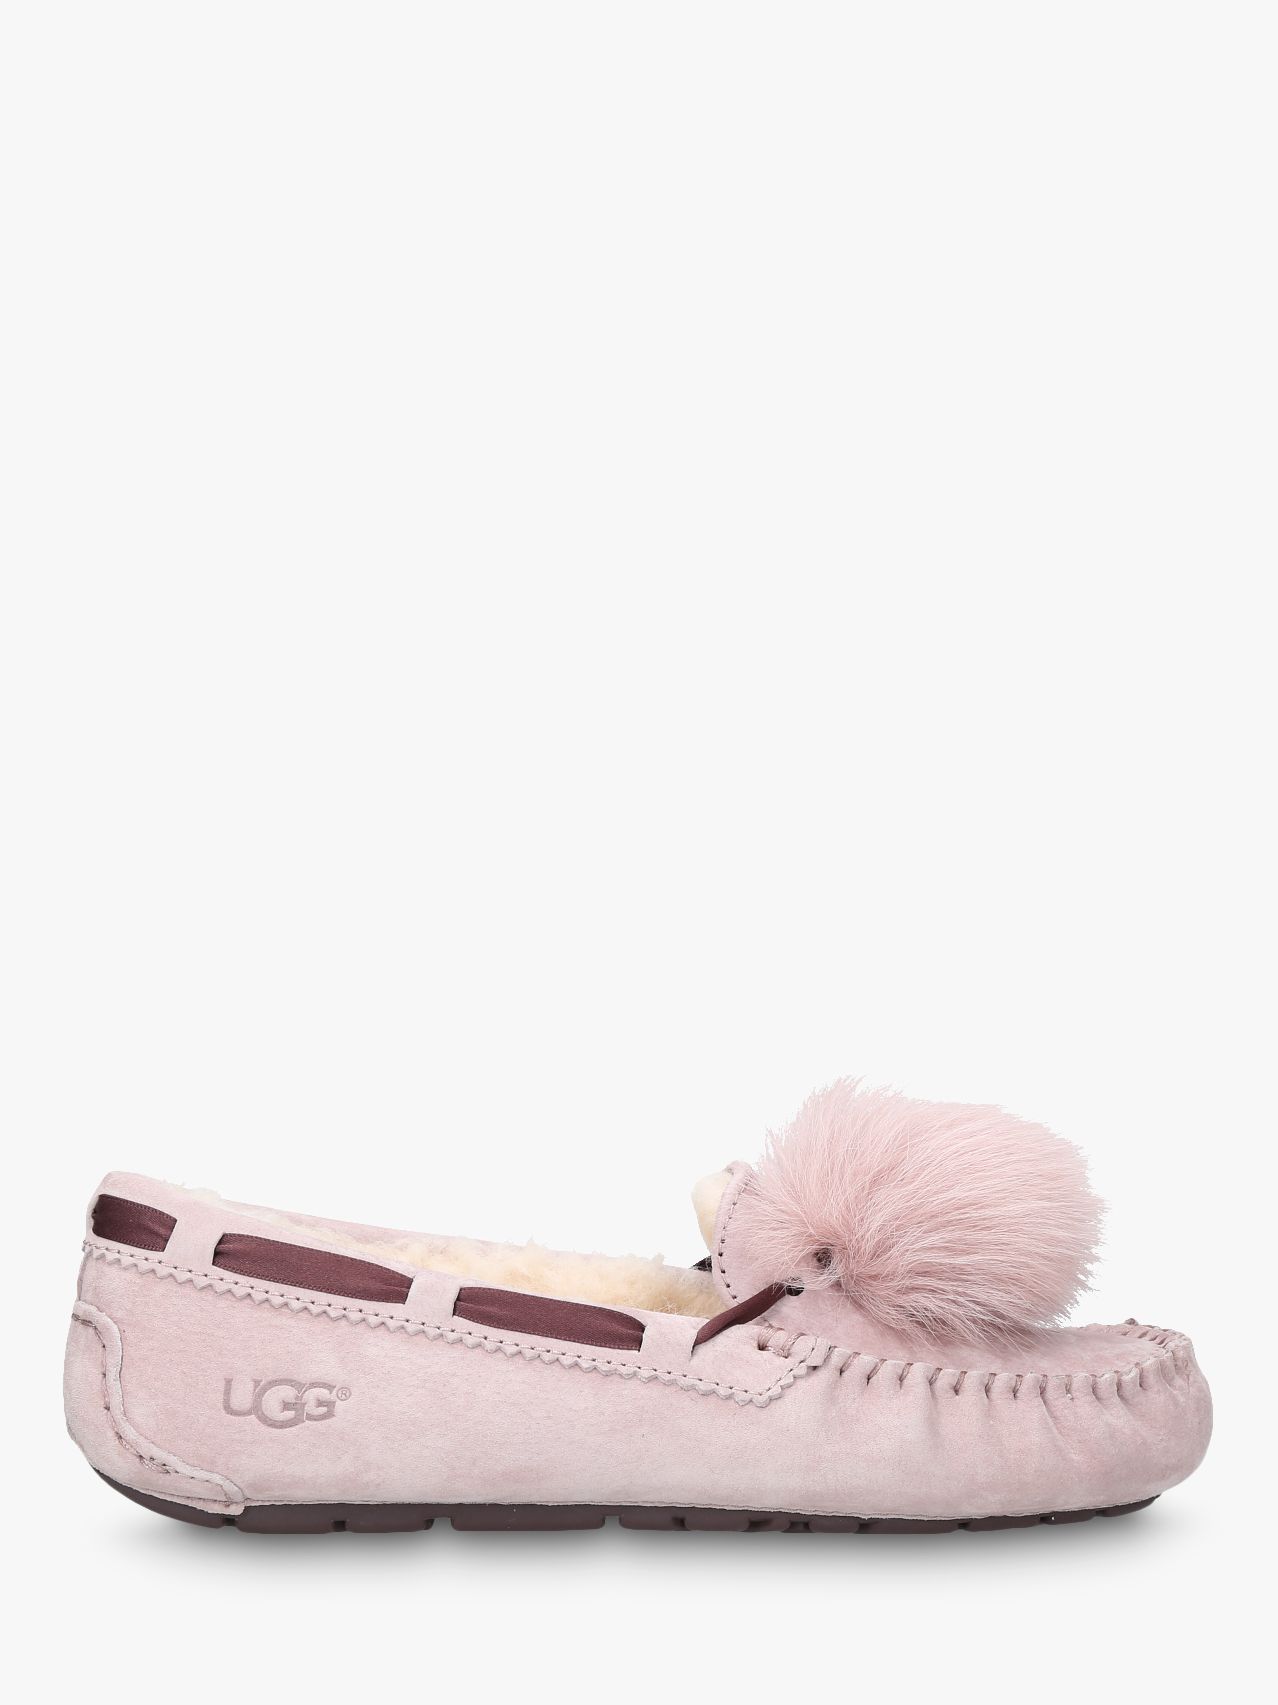 ugg slippers 7